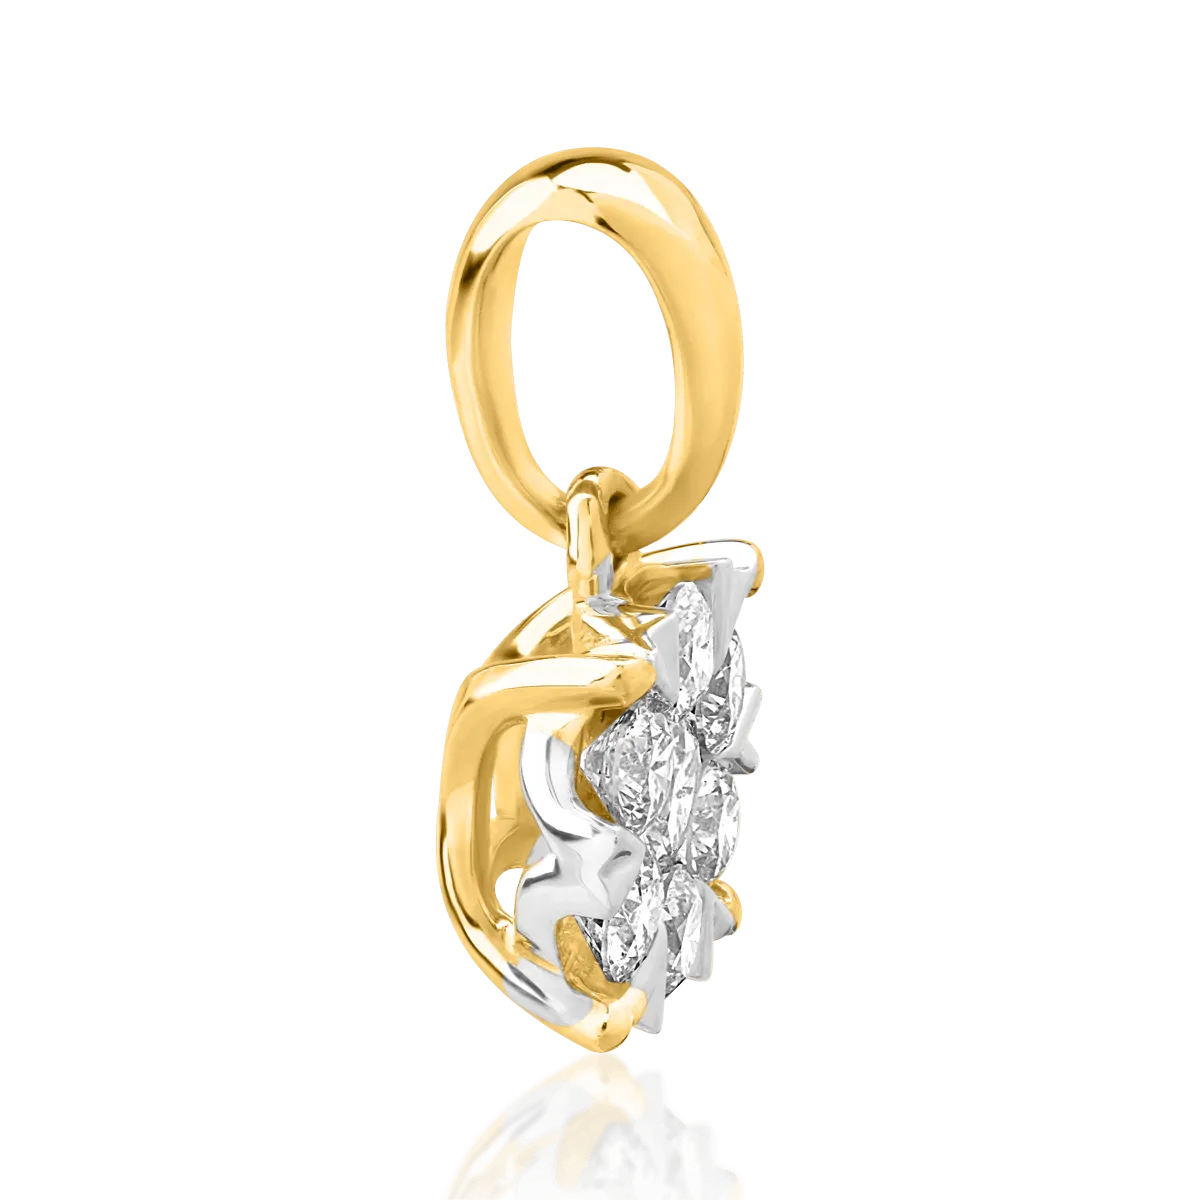 18K yellow gold pendant with 0.34ct diamonds